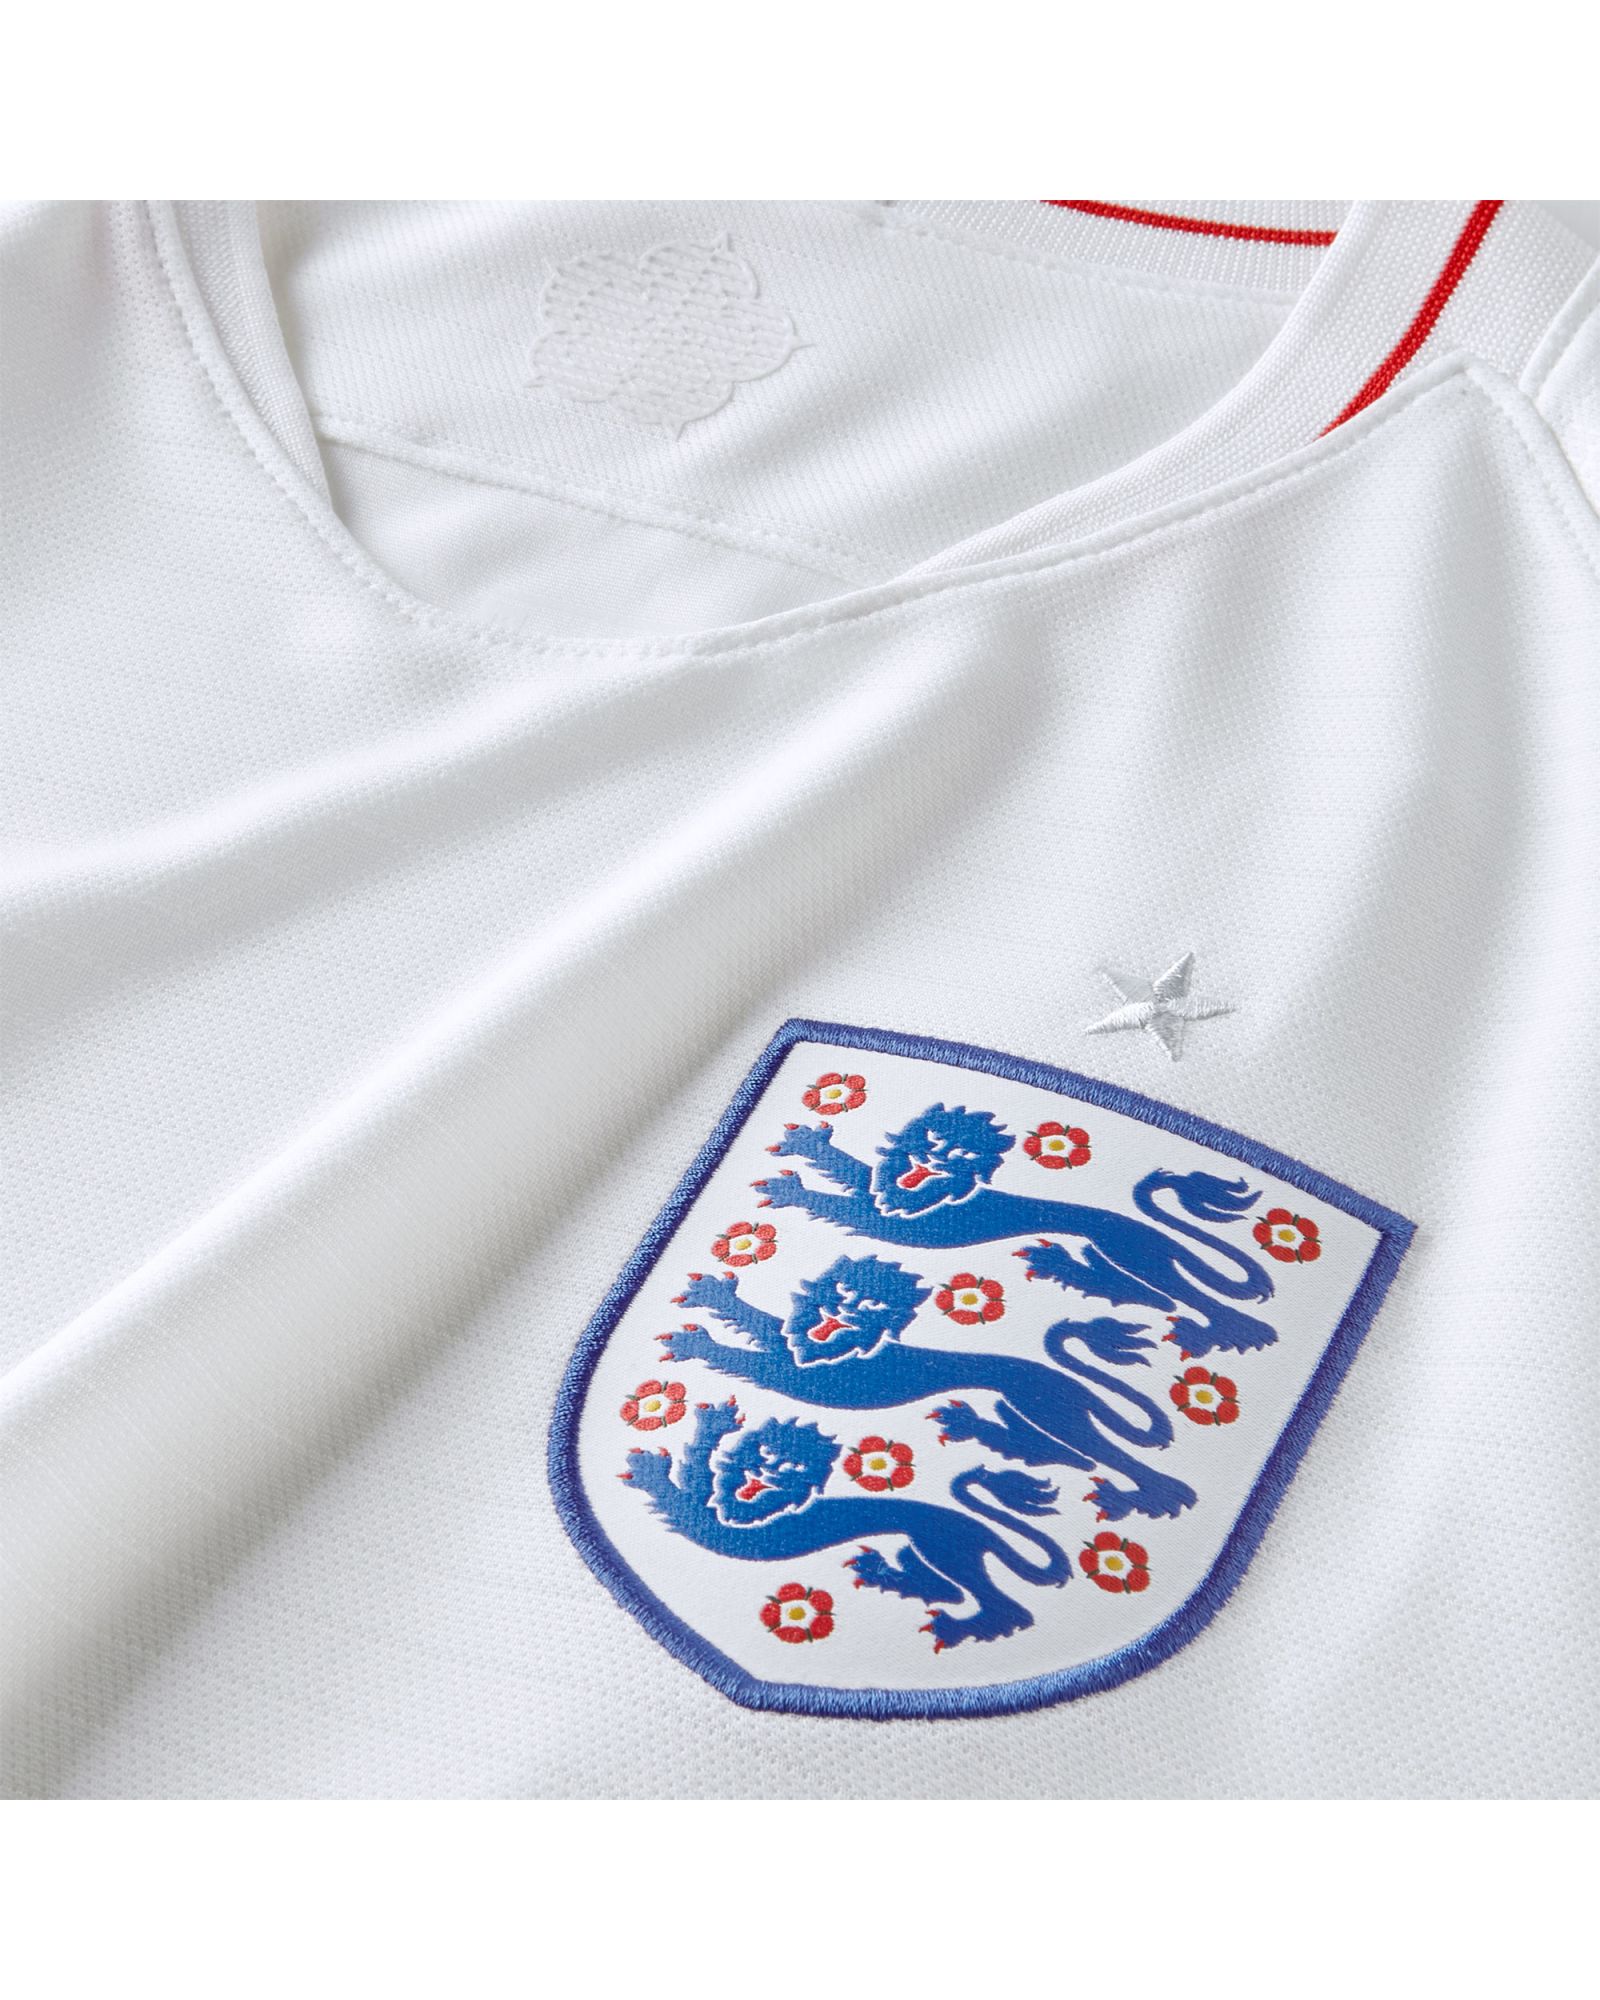 Camiseta 1ª Inglaterra Mundial 2018 Blanco - Fútbol Factory